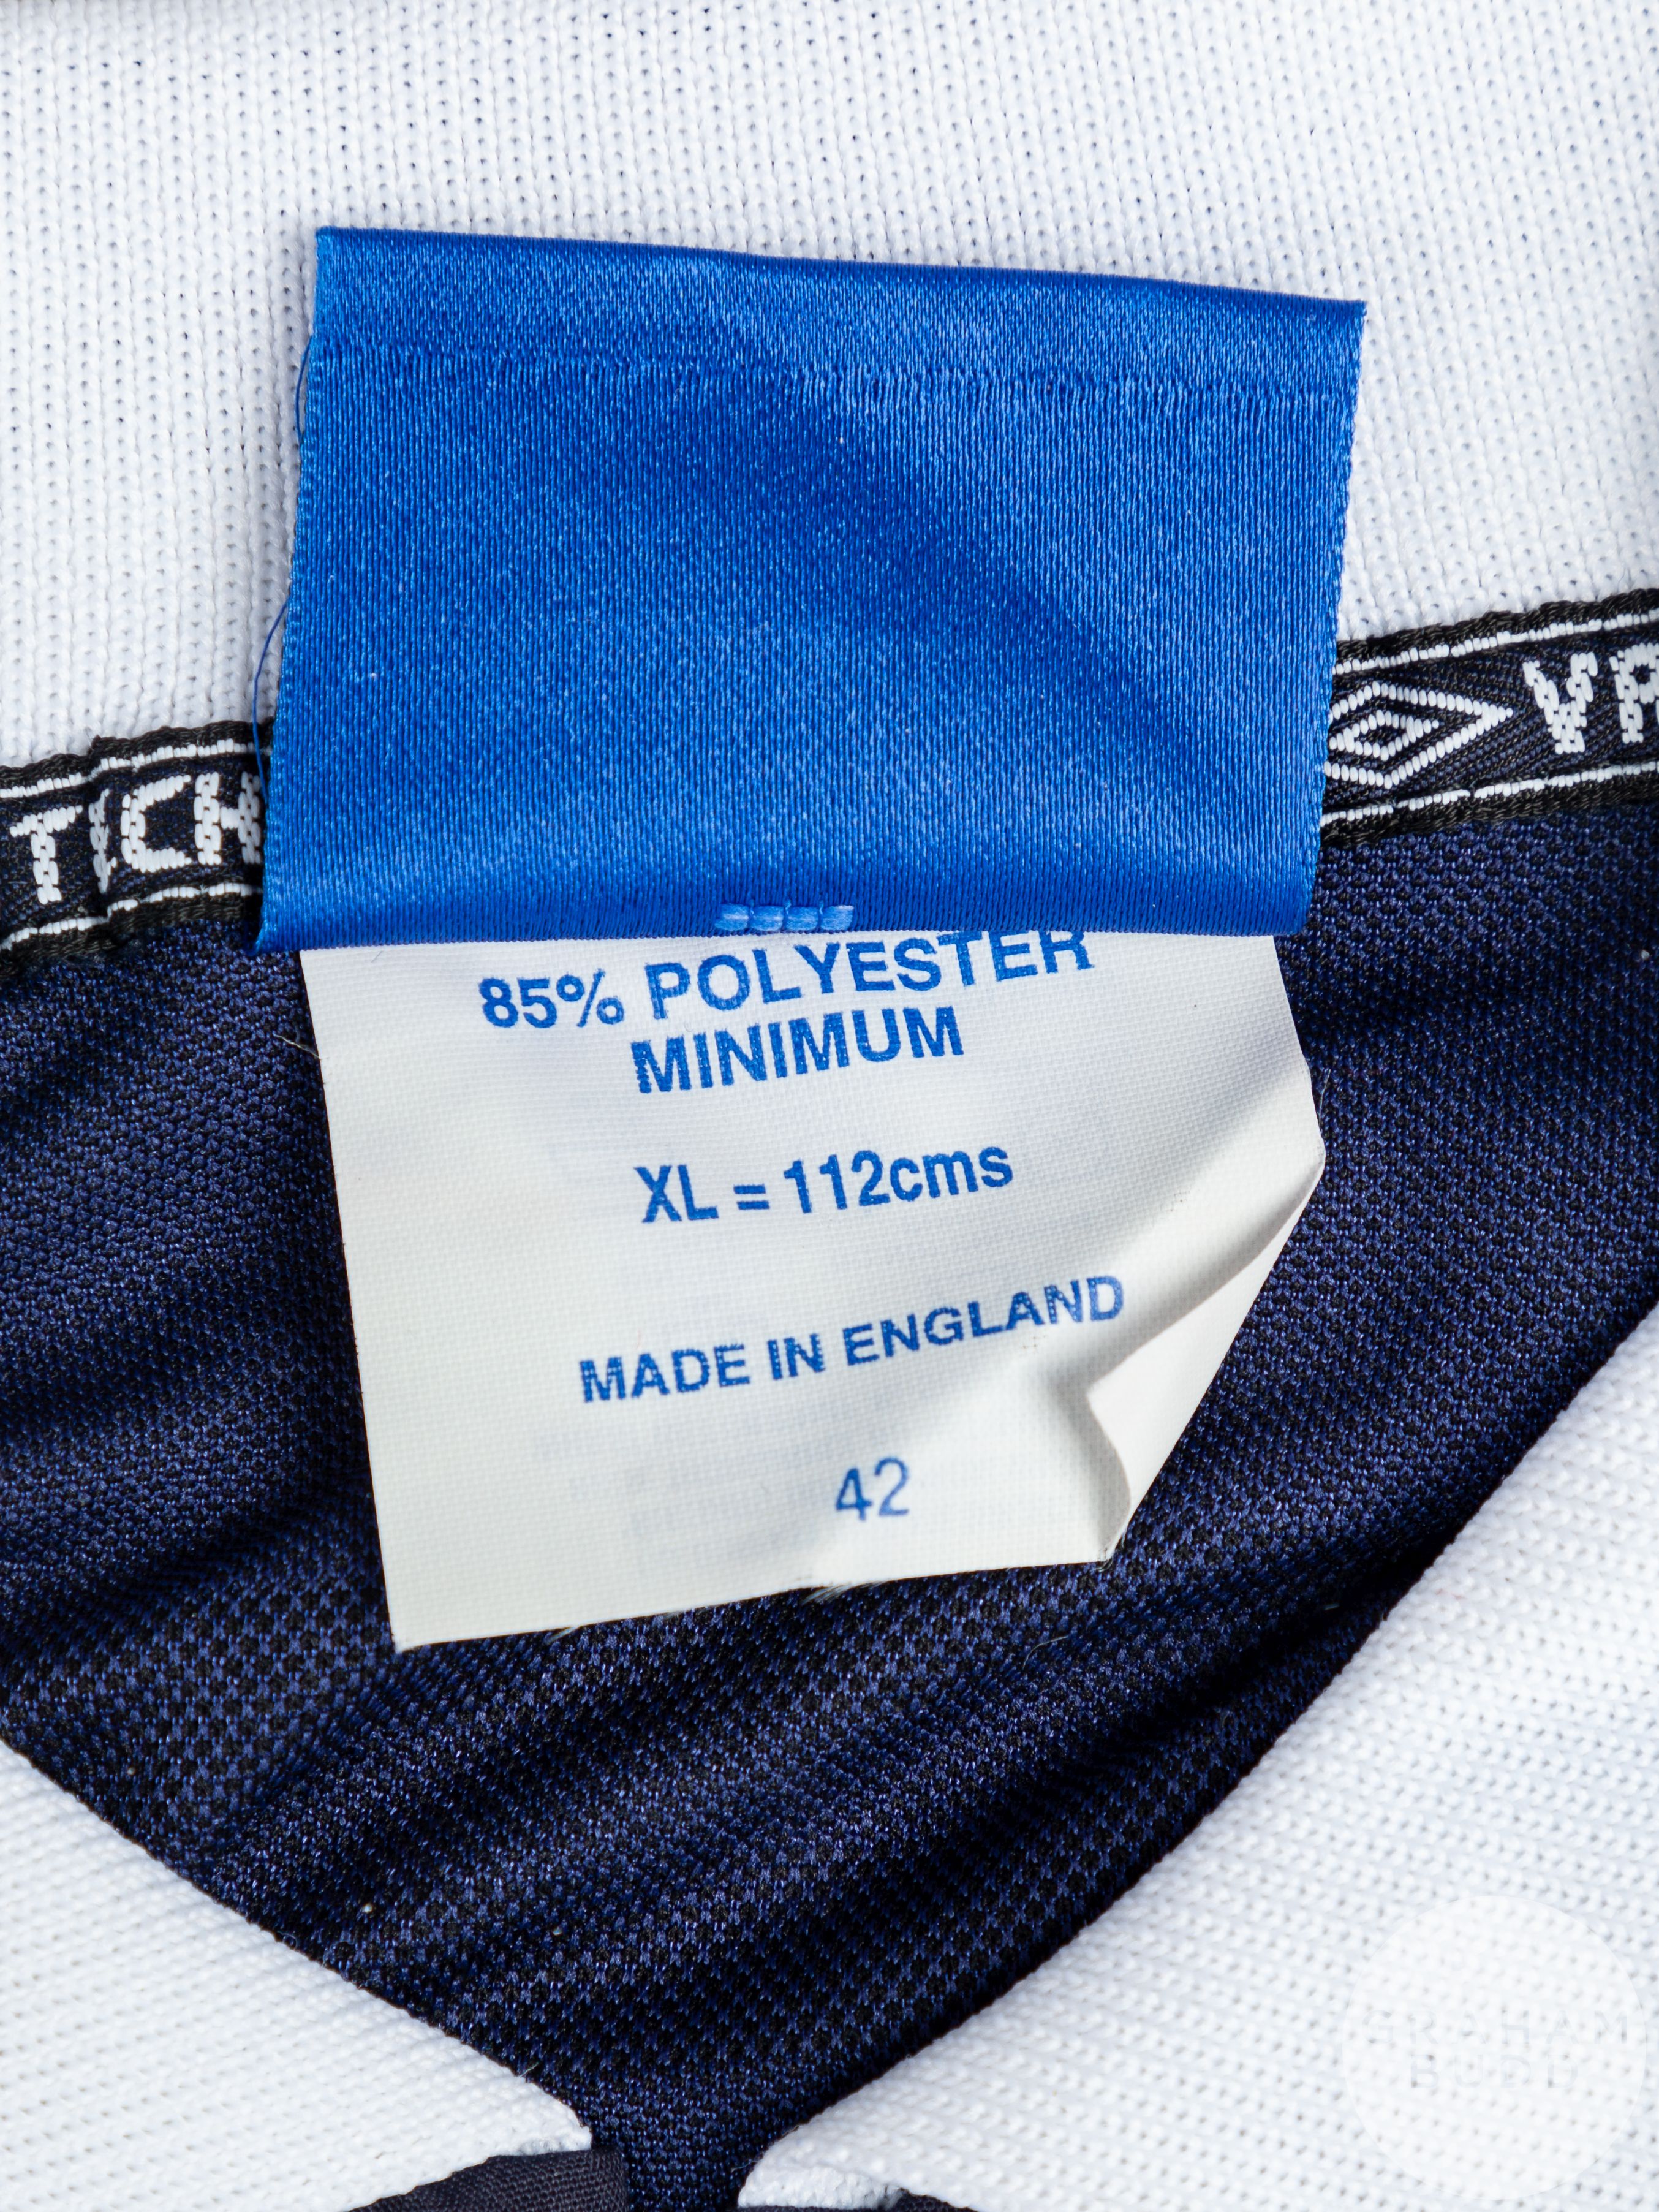 Blue and white No.17 Scotland international short-sleeved shirt, 1998-2000 - Image 7 of 7